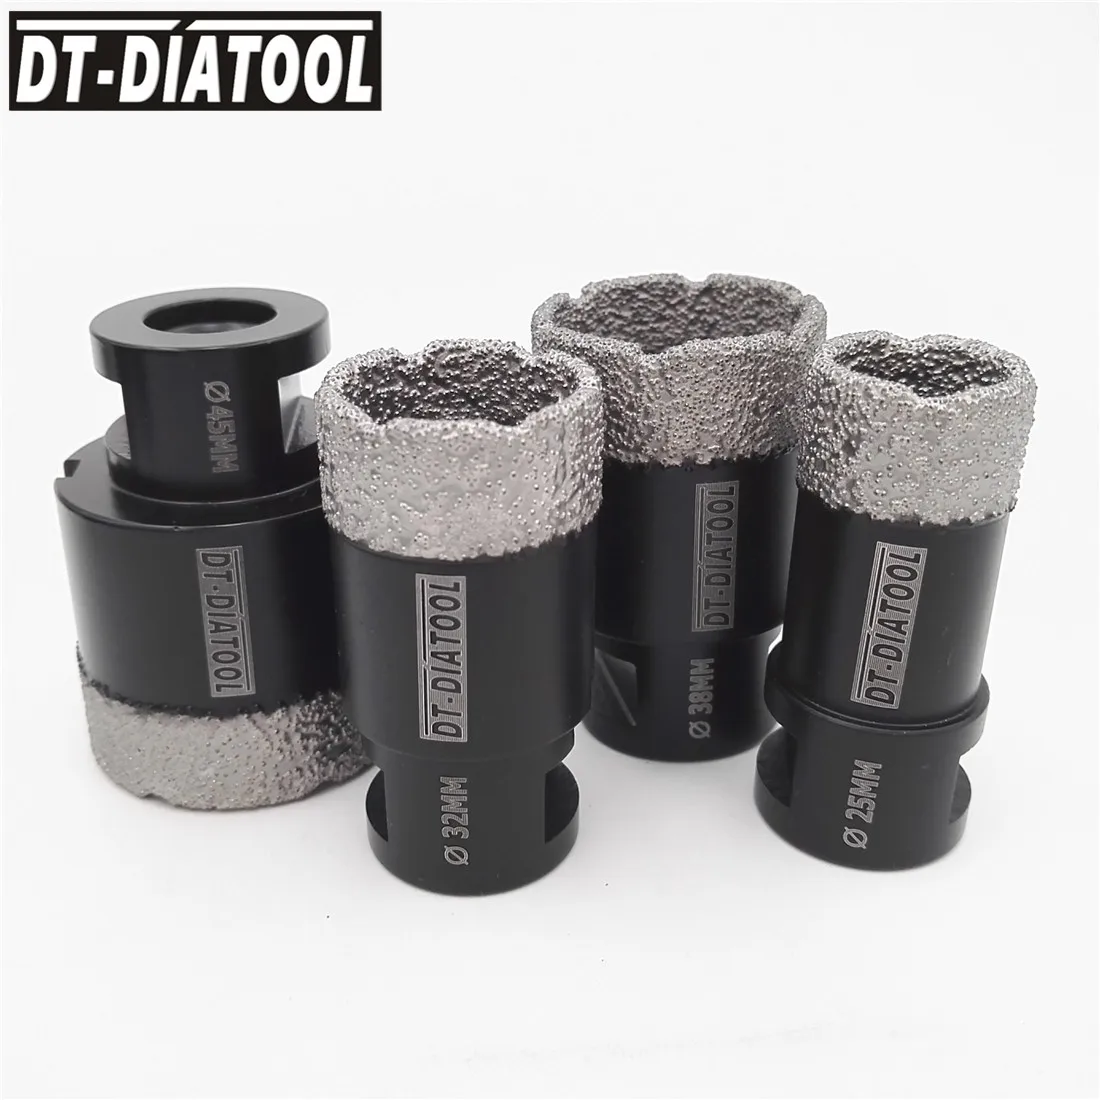 DT-DIATOOL 4pcs M14 Thread Dry Diamond Drilling Core Bits Hole Saw for Ceramic Tile Drill Bits Granite Marble Drilling Bits